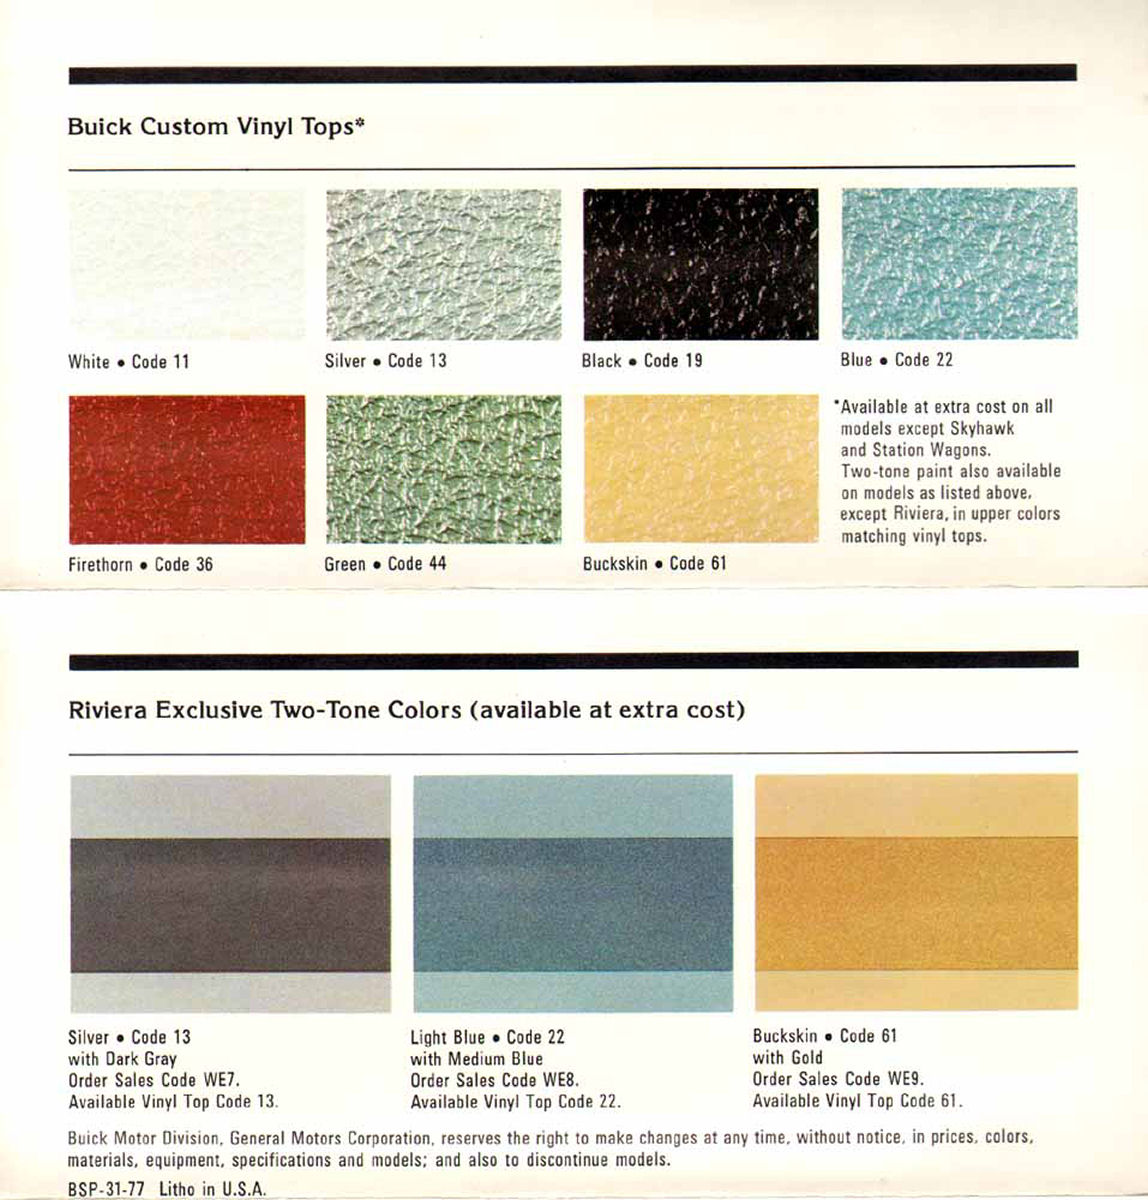 1977 Buick Exterior Colors Chart-05-06